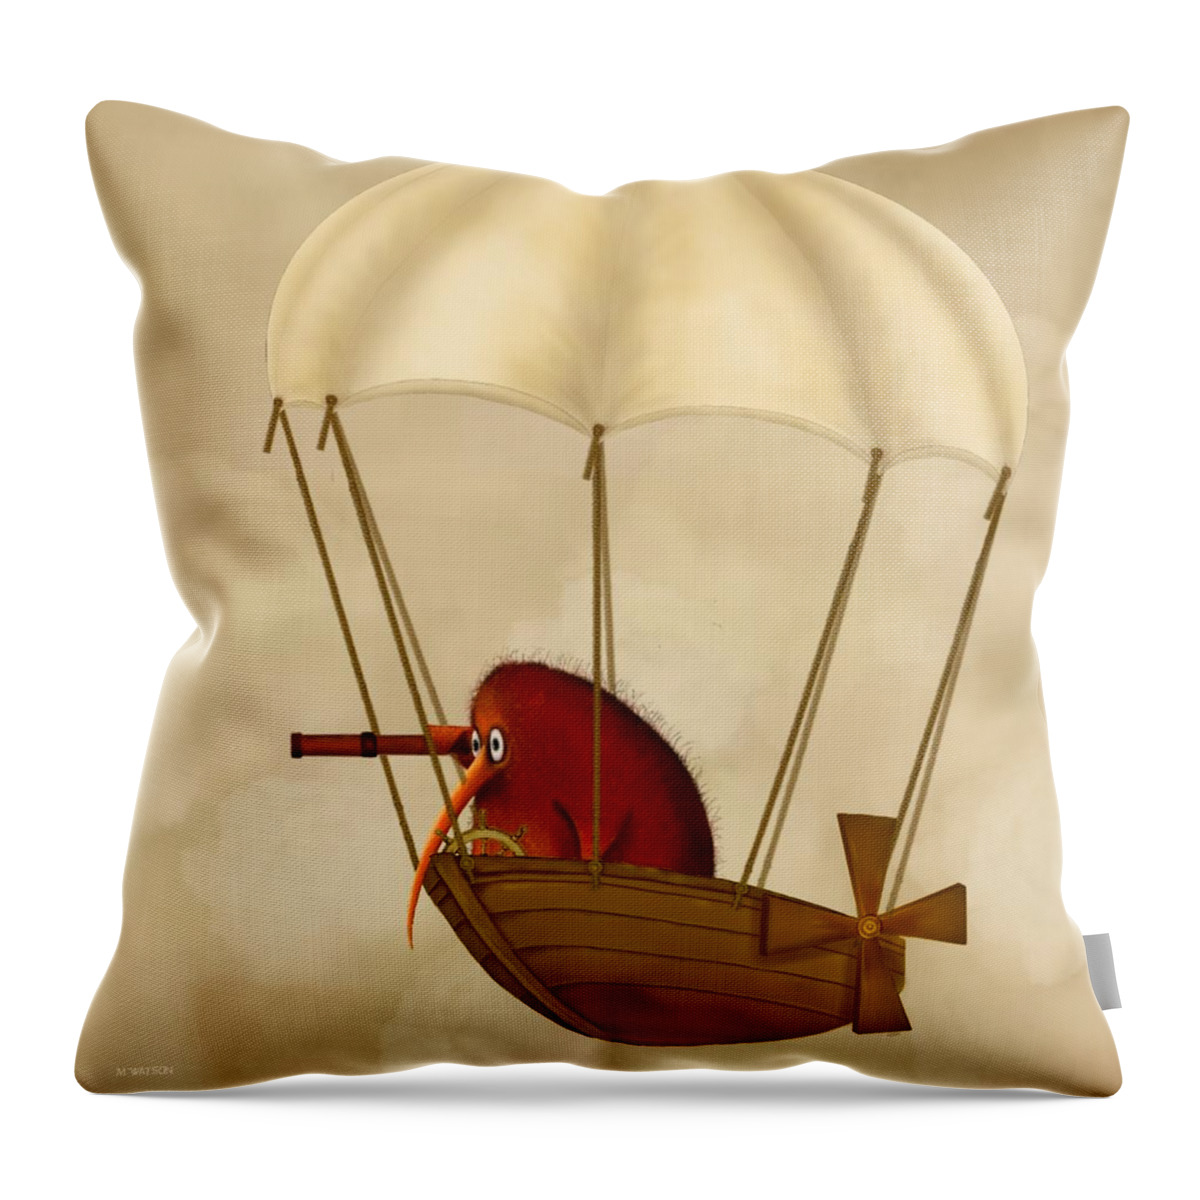 Kiwi Bird Throw Pillow featuring the digital art Kiwi Bird Kev's Airship by Marlene Watson